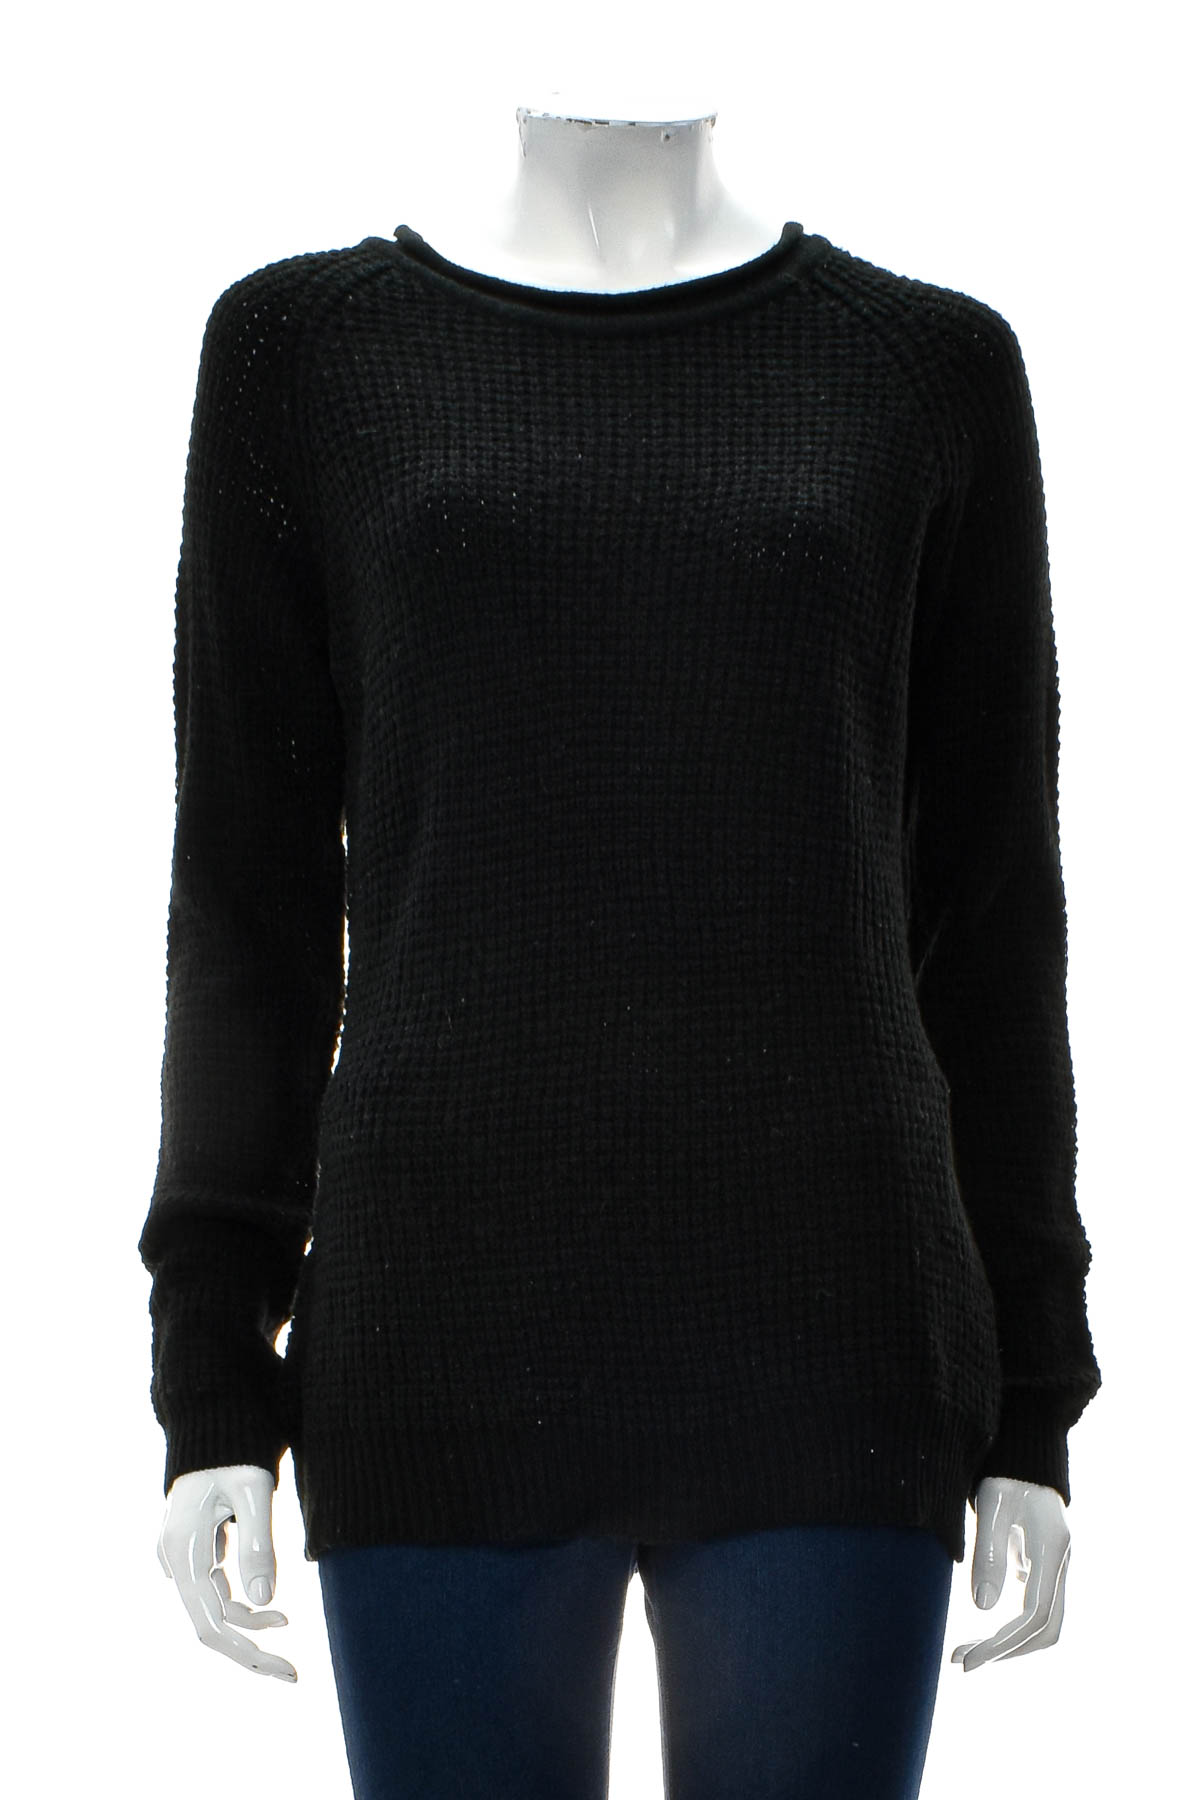 Women's sweater - Ambiance Apparel - 0